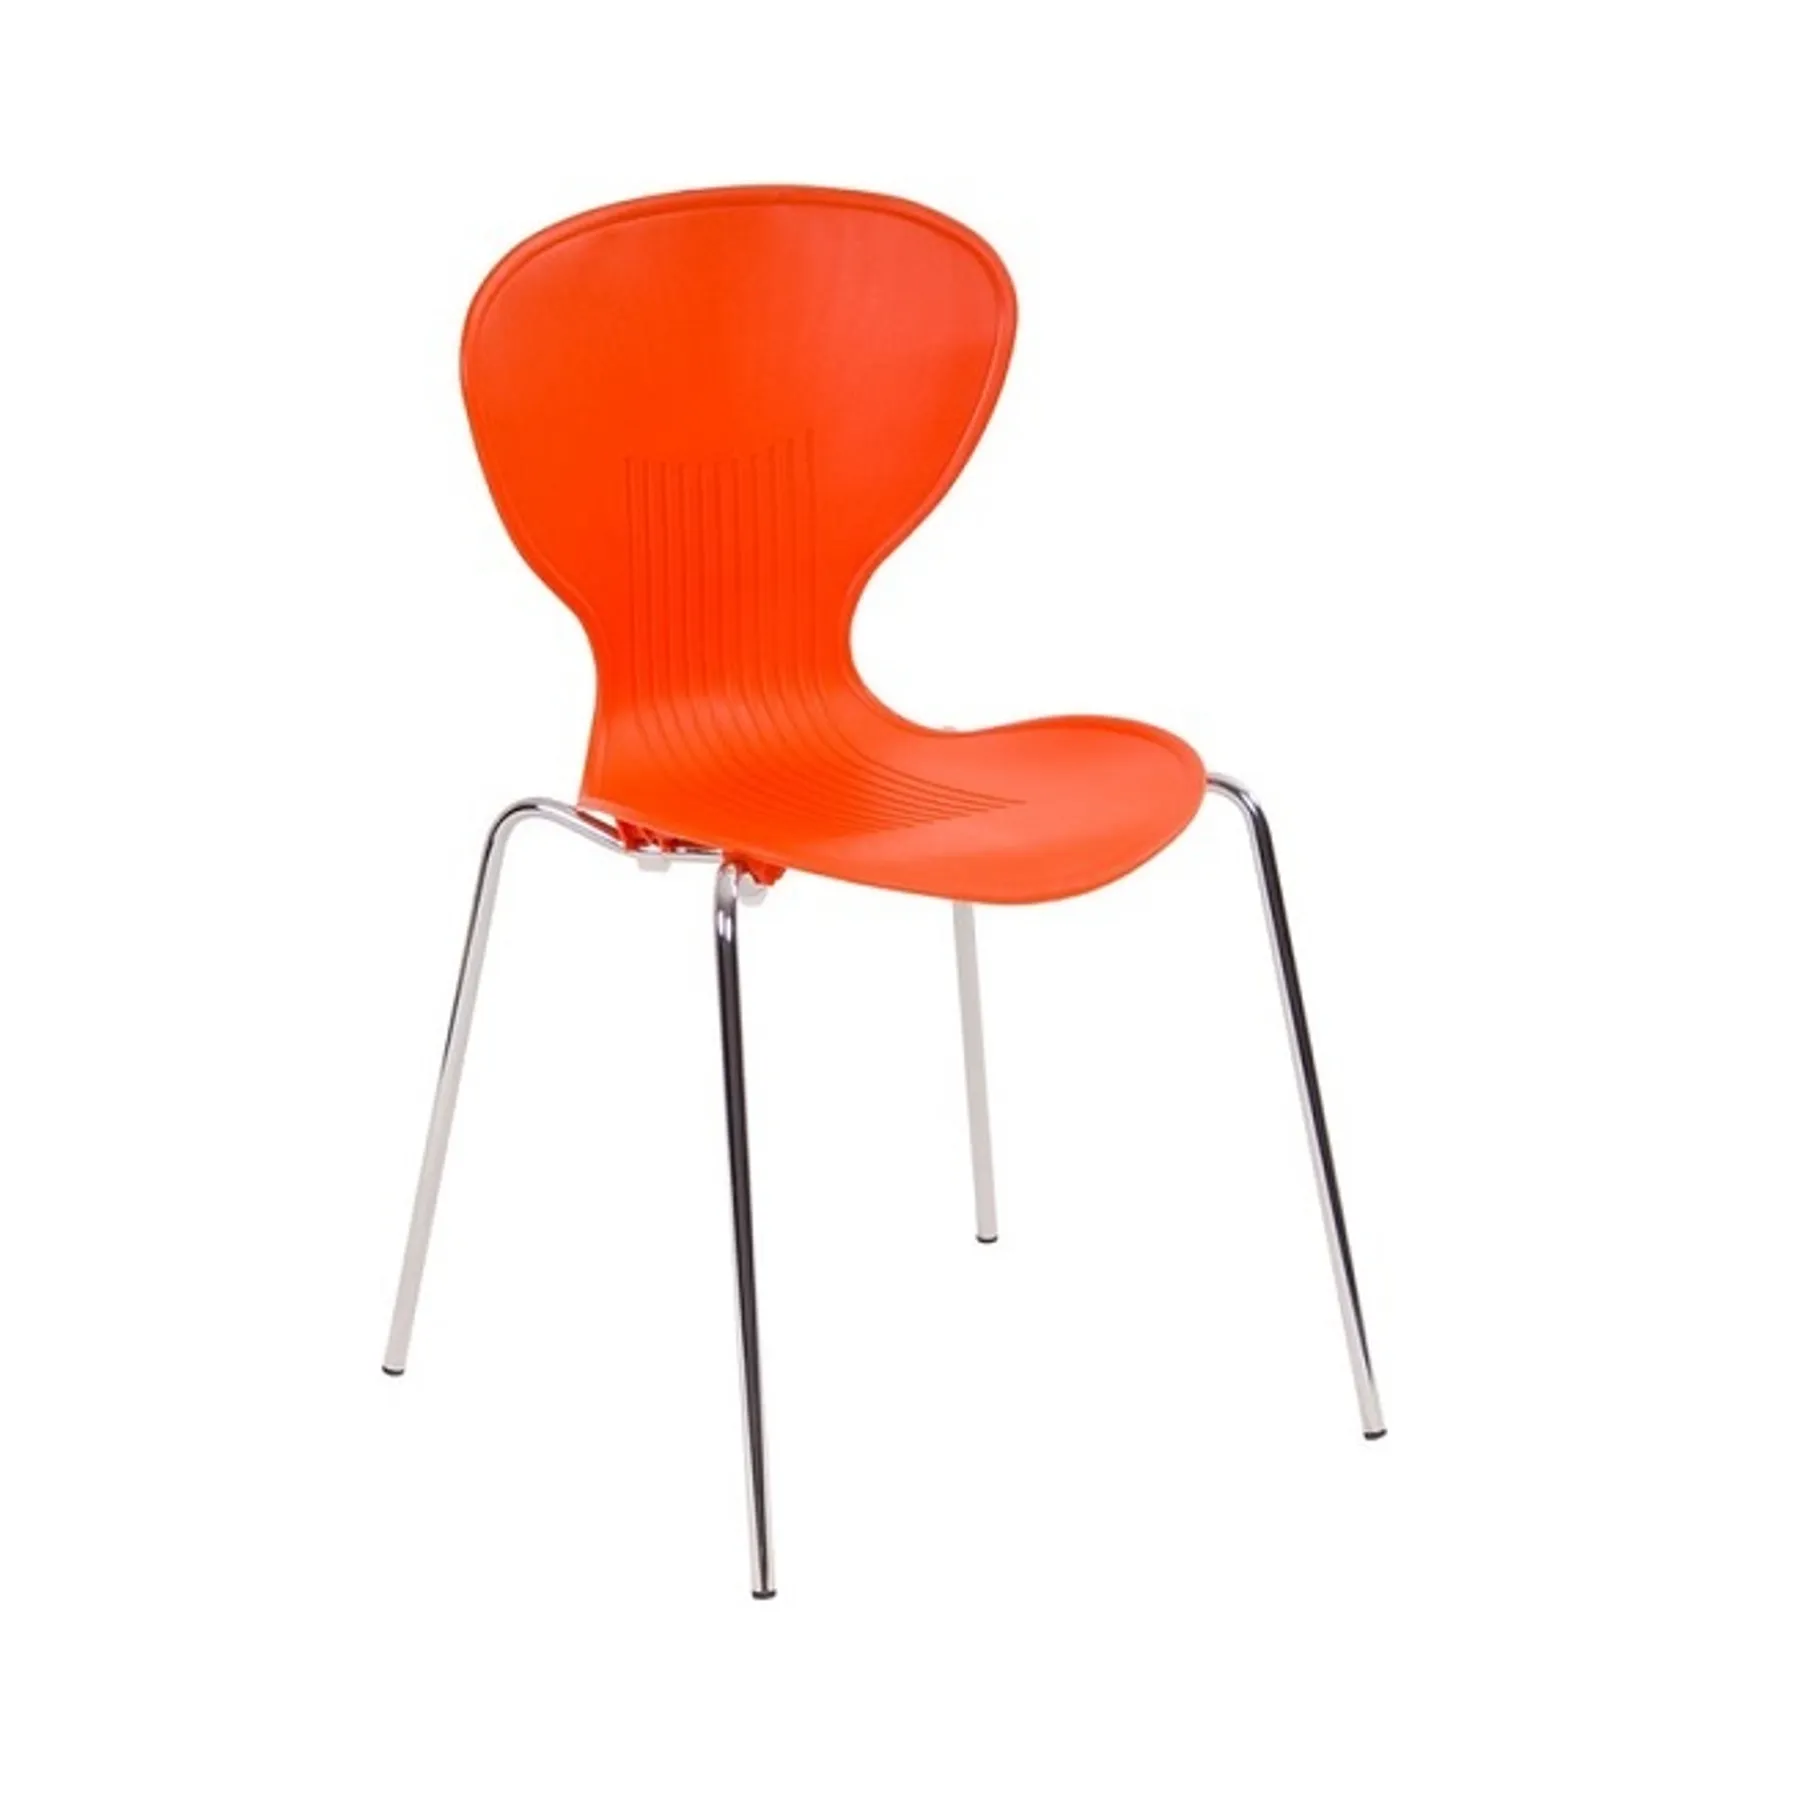 Lof direct Sven Christiansen XRC1 Plastic Cafe Chair Orange